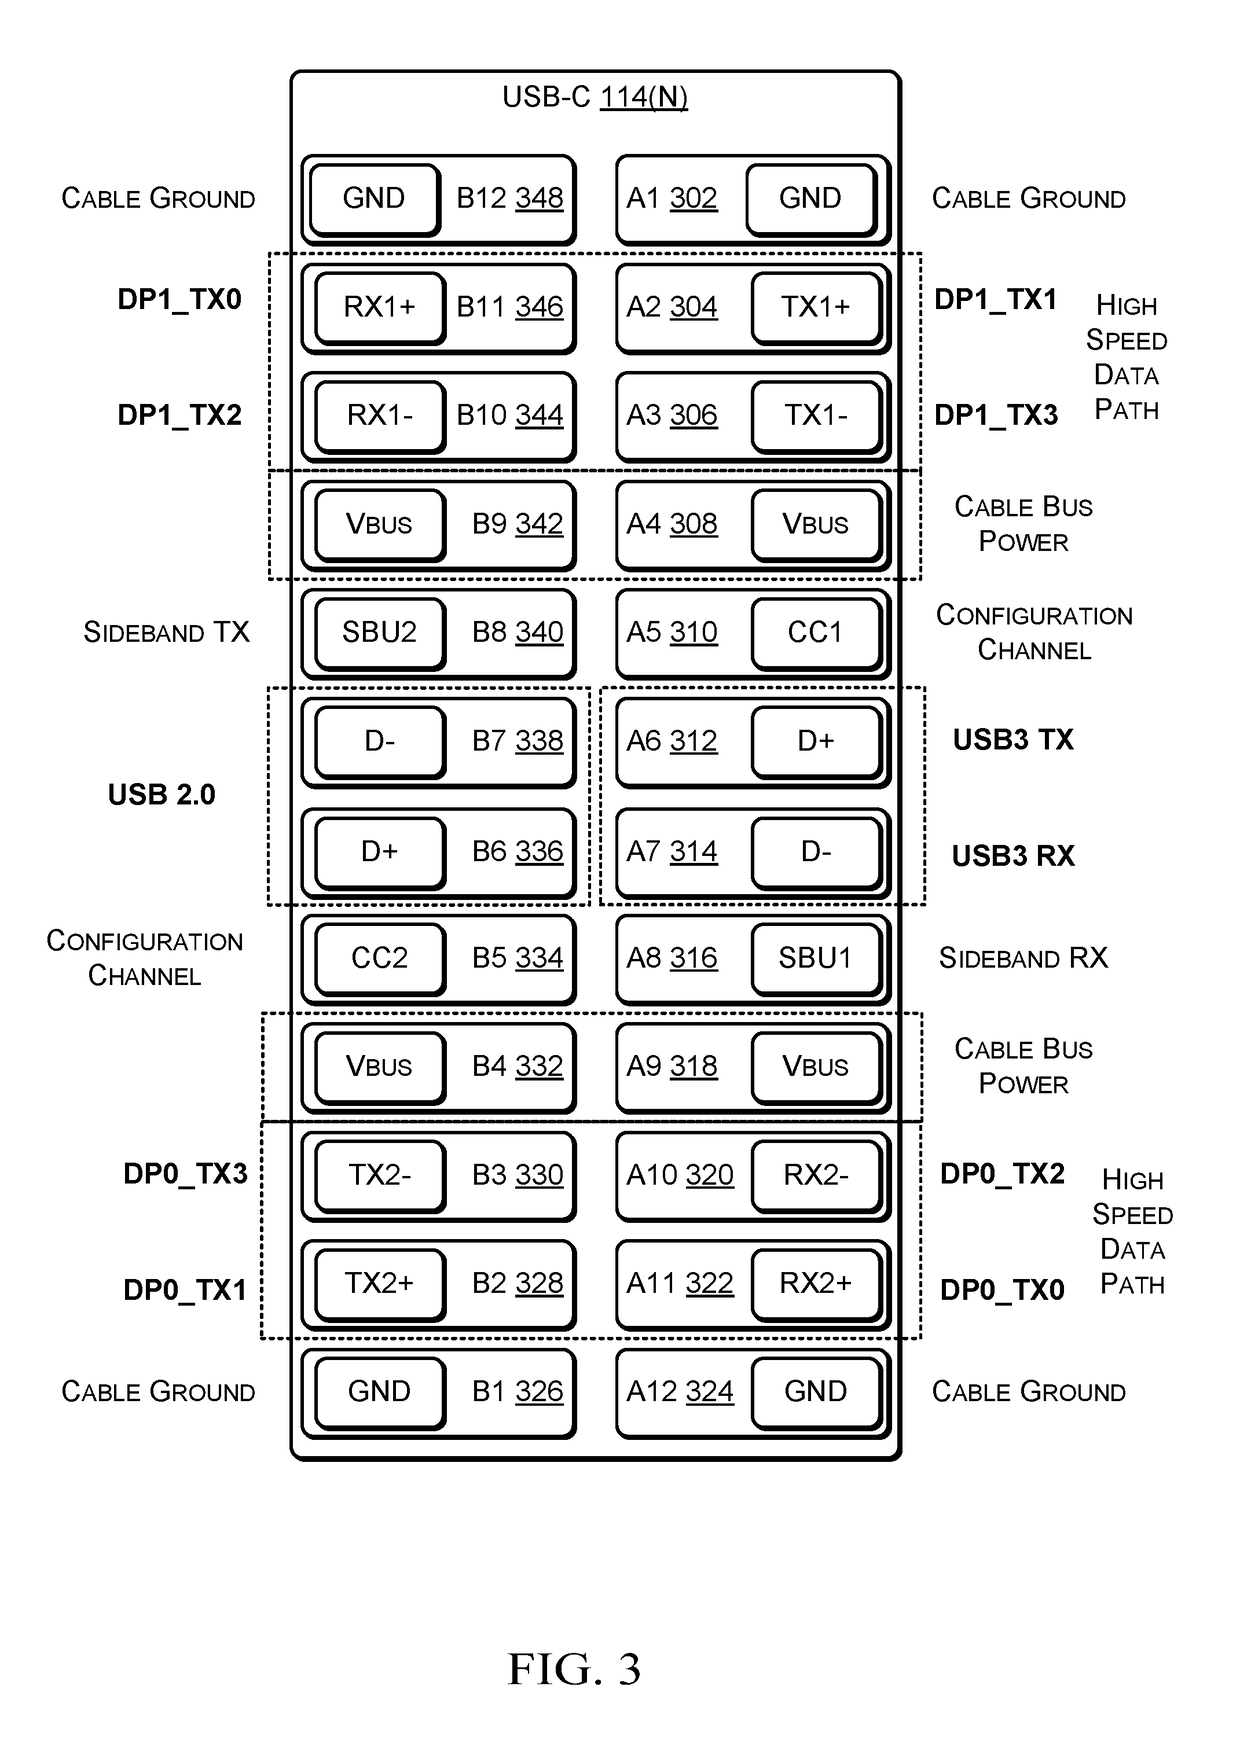 Increasing data throughput of a universal serial bus (USB) type-C port